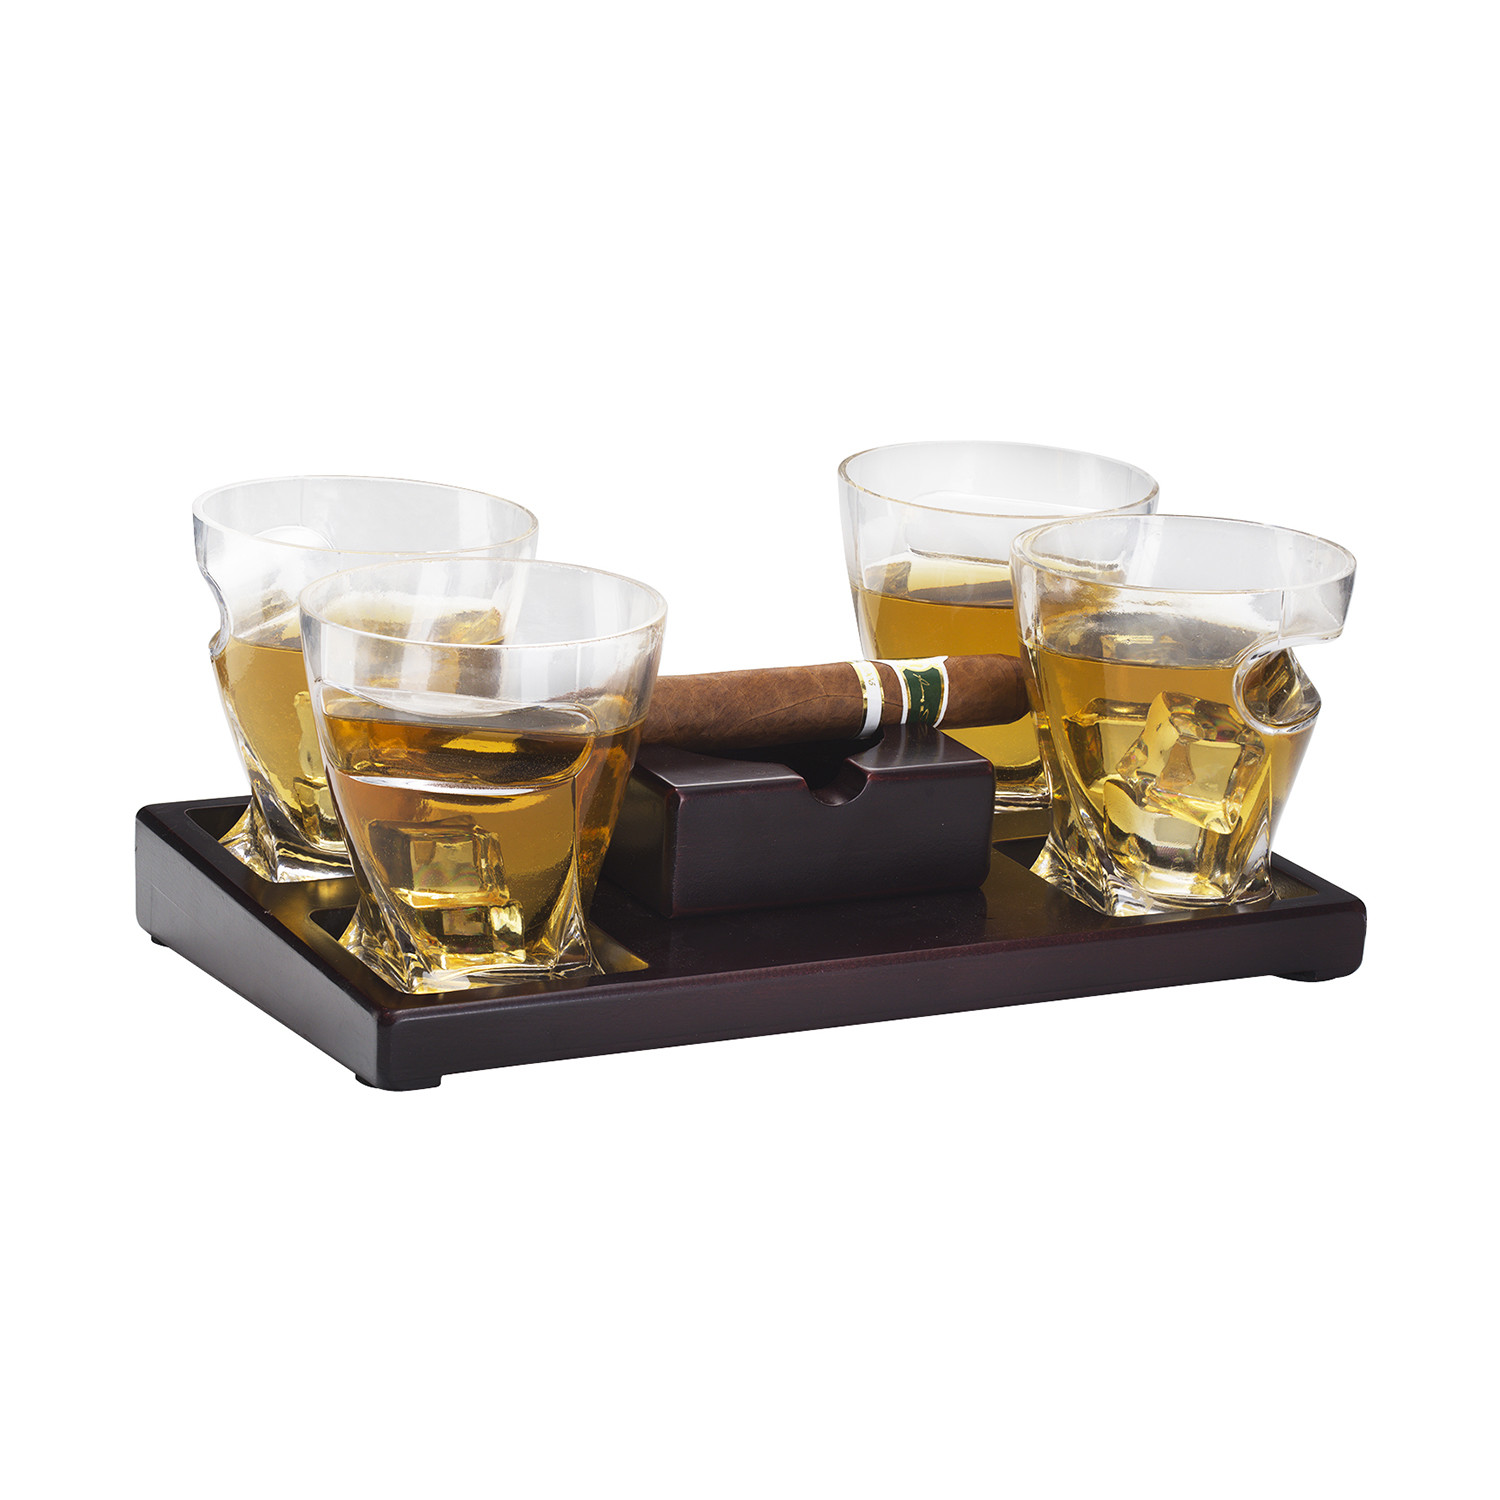 Goodfellas Cigar Ashtray, Serving Tray